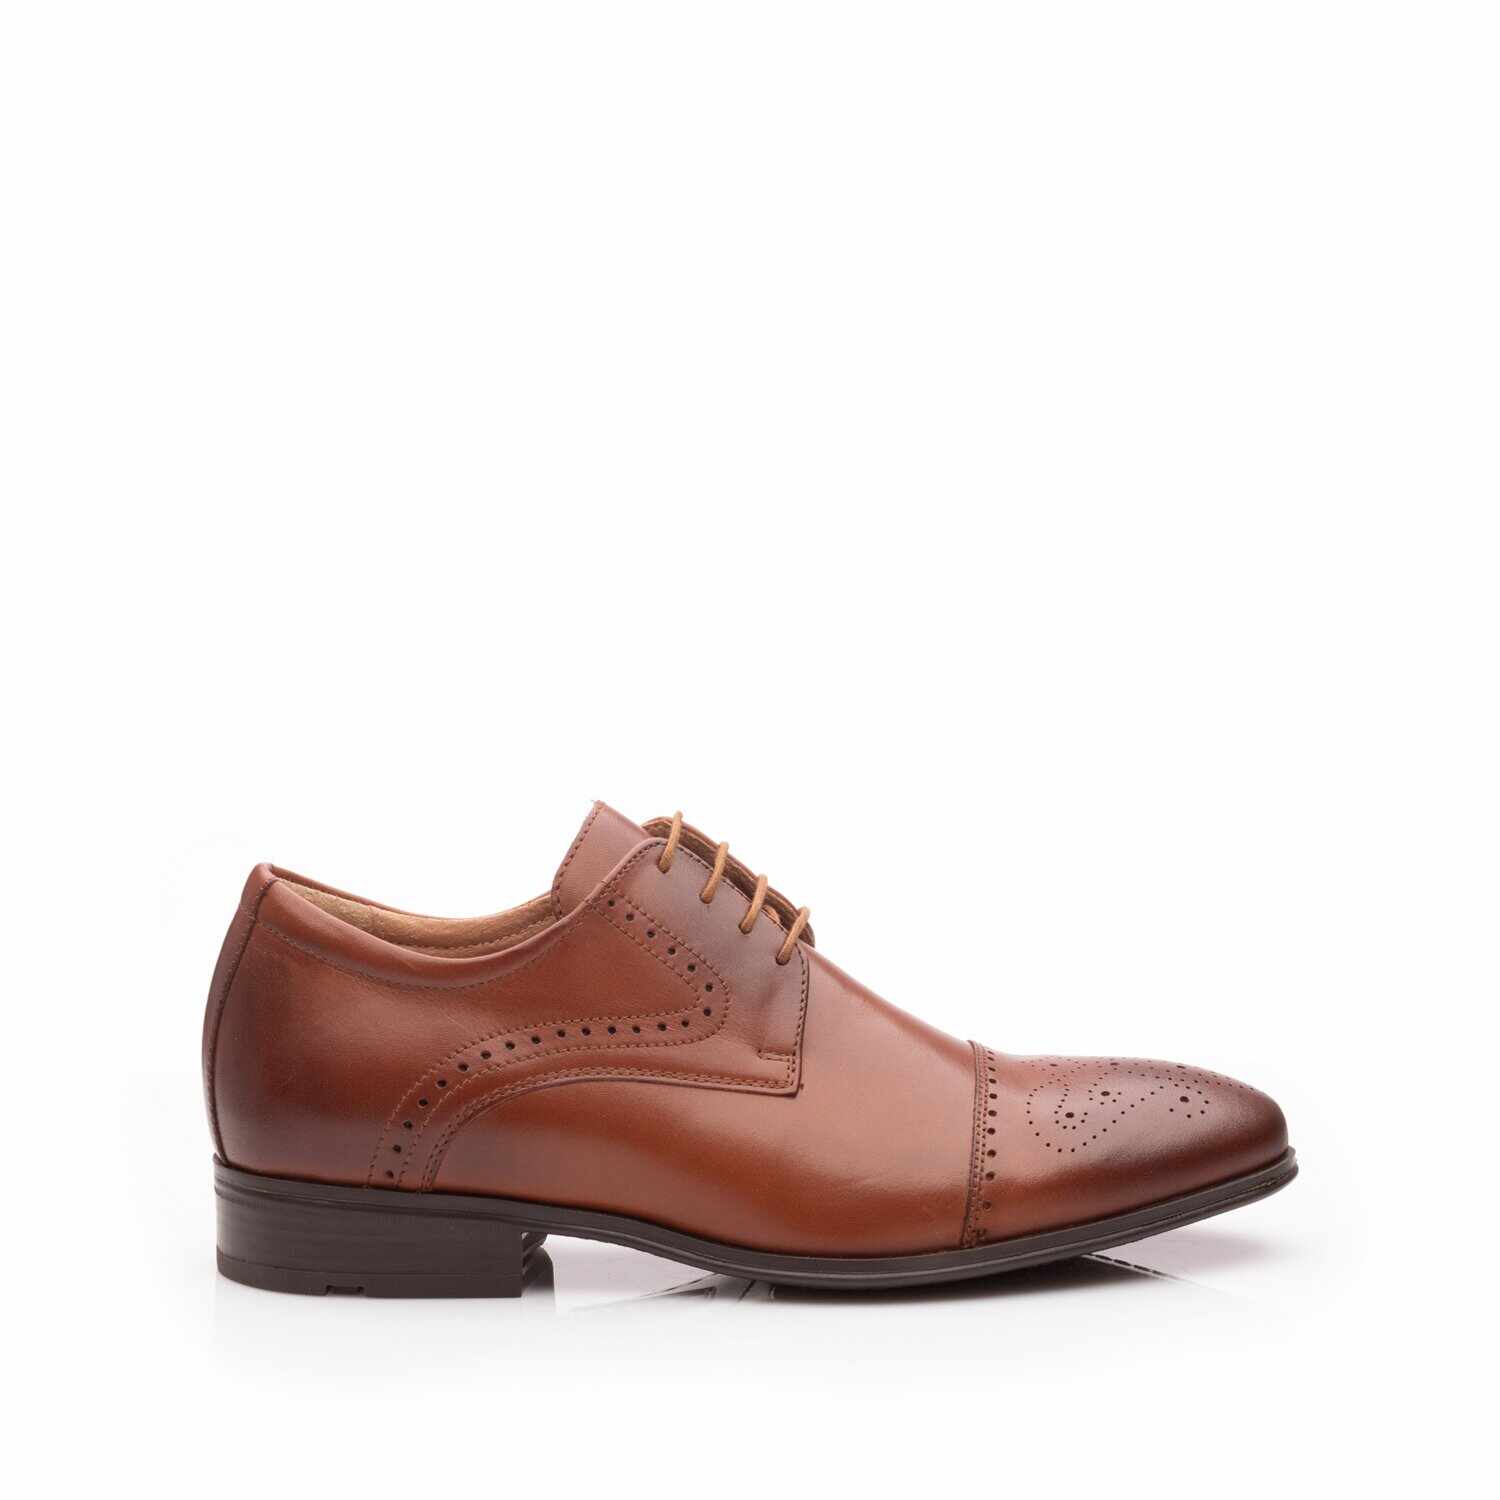 Pantofi eleganti barbati din piele naturala, Leofex - 529 Cognac box